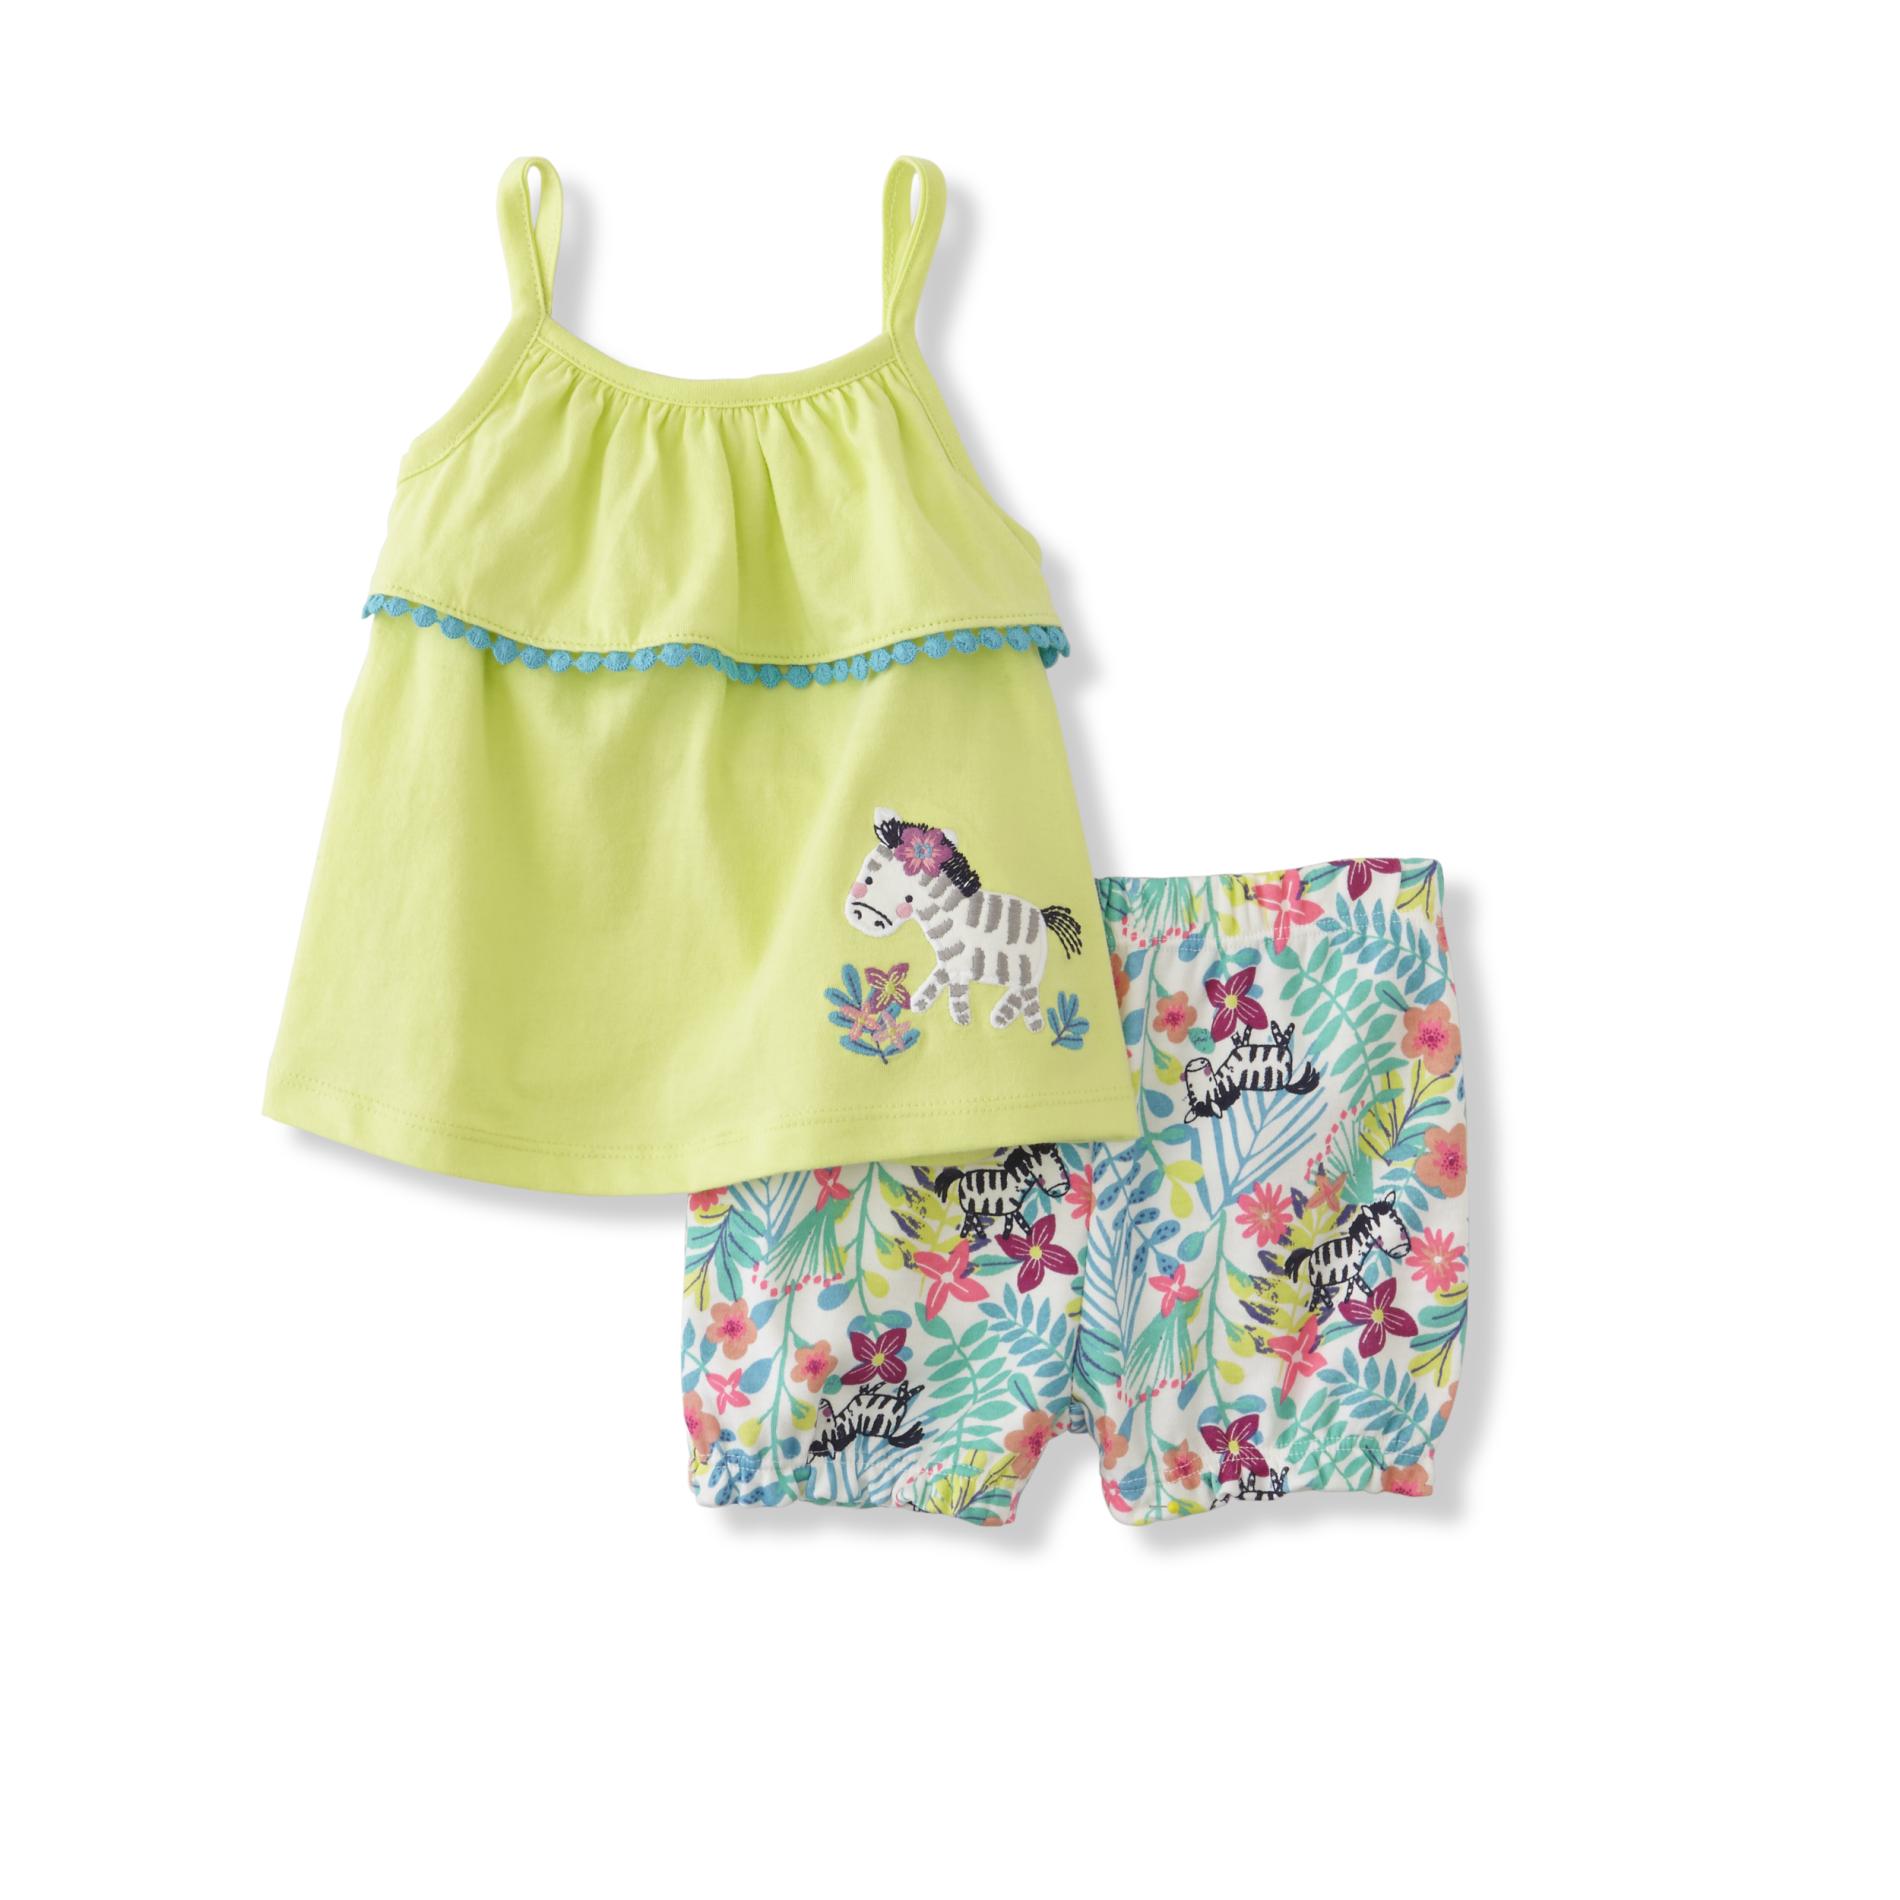 Little Wonders Infant Girls' Tank Top & Shorts - Zebra